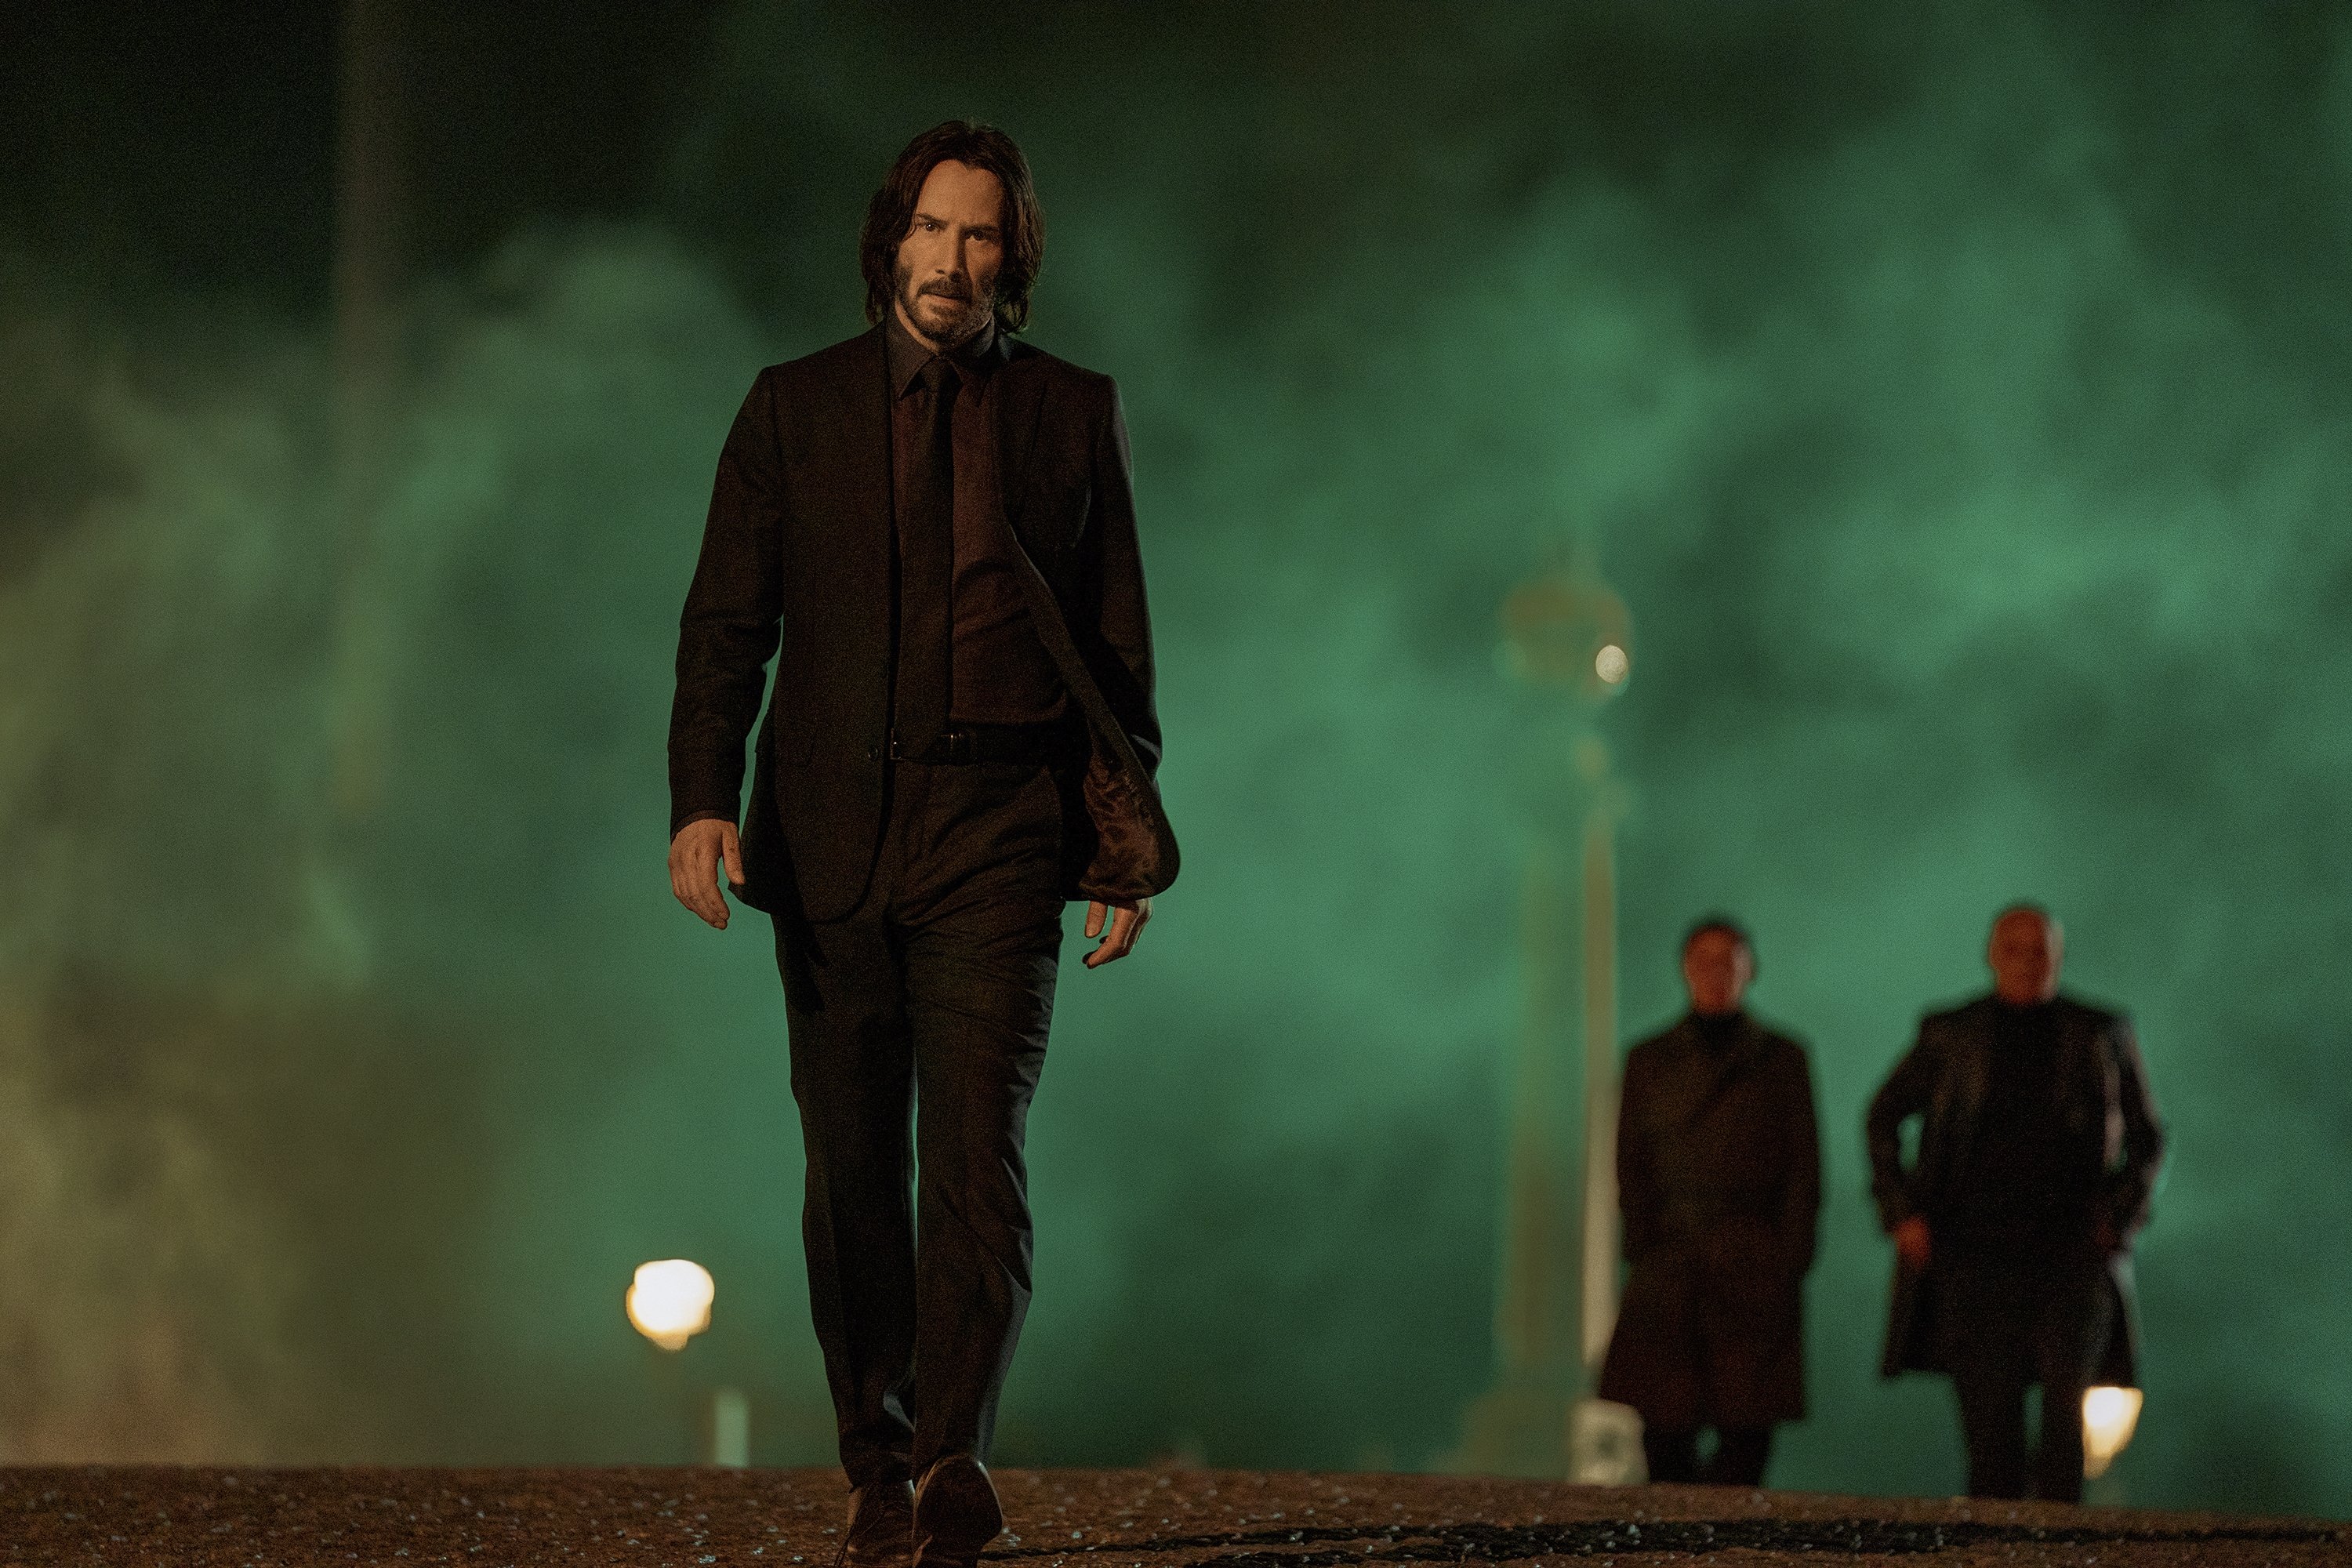 Gambar ini dirilis oleh Lionsgate menunjukkan Keanu Reeves sebagai John Wick dalam sebuah adegan dari 